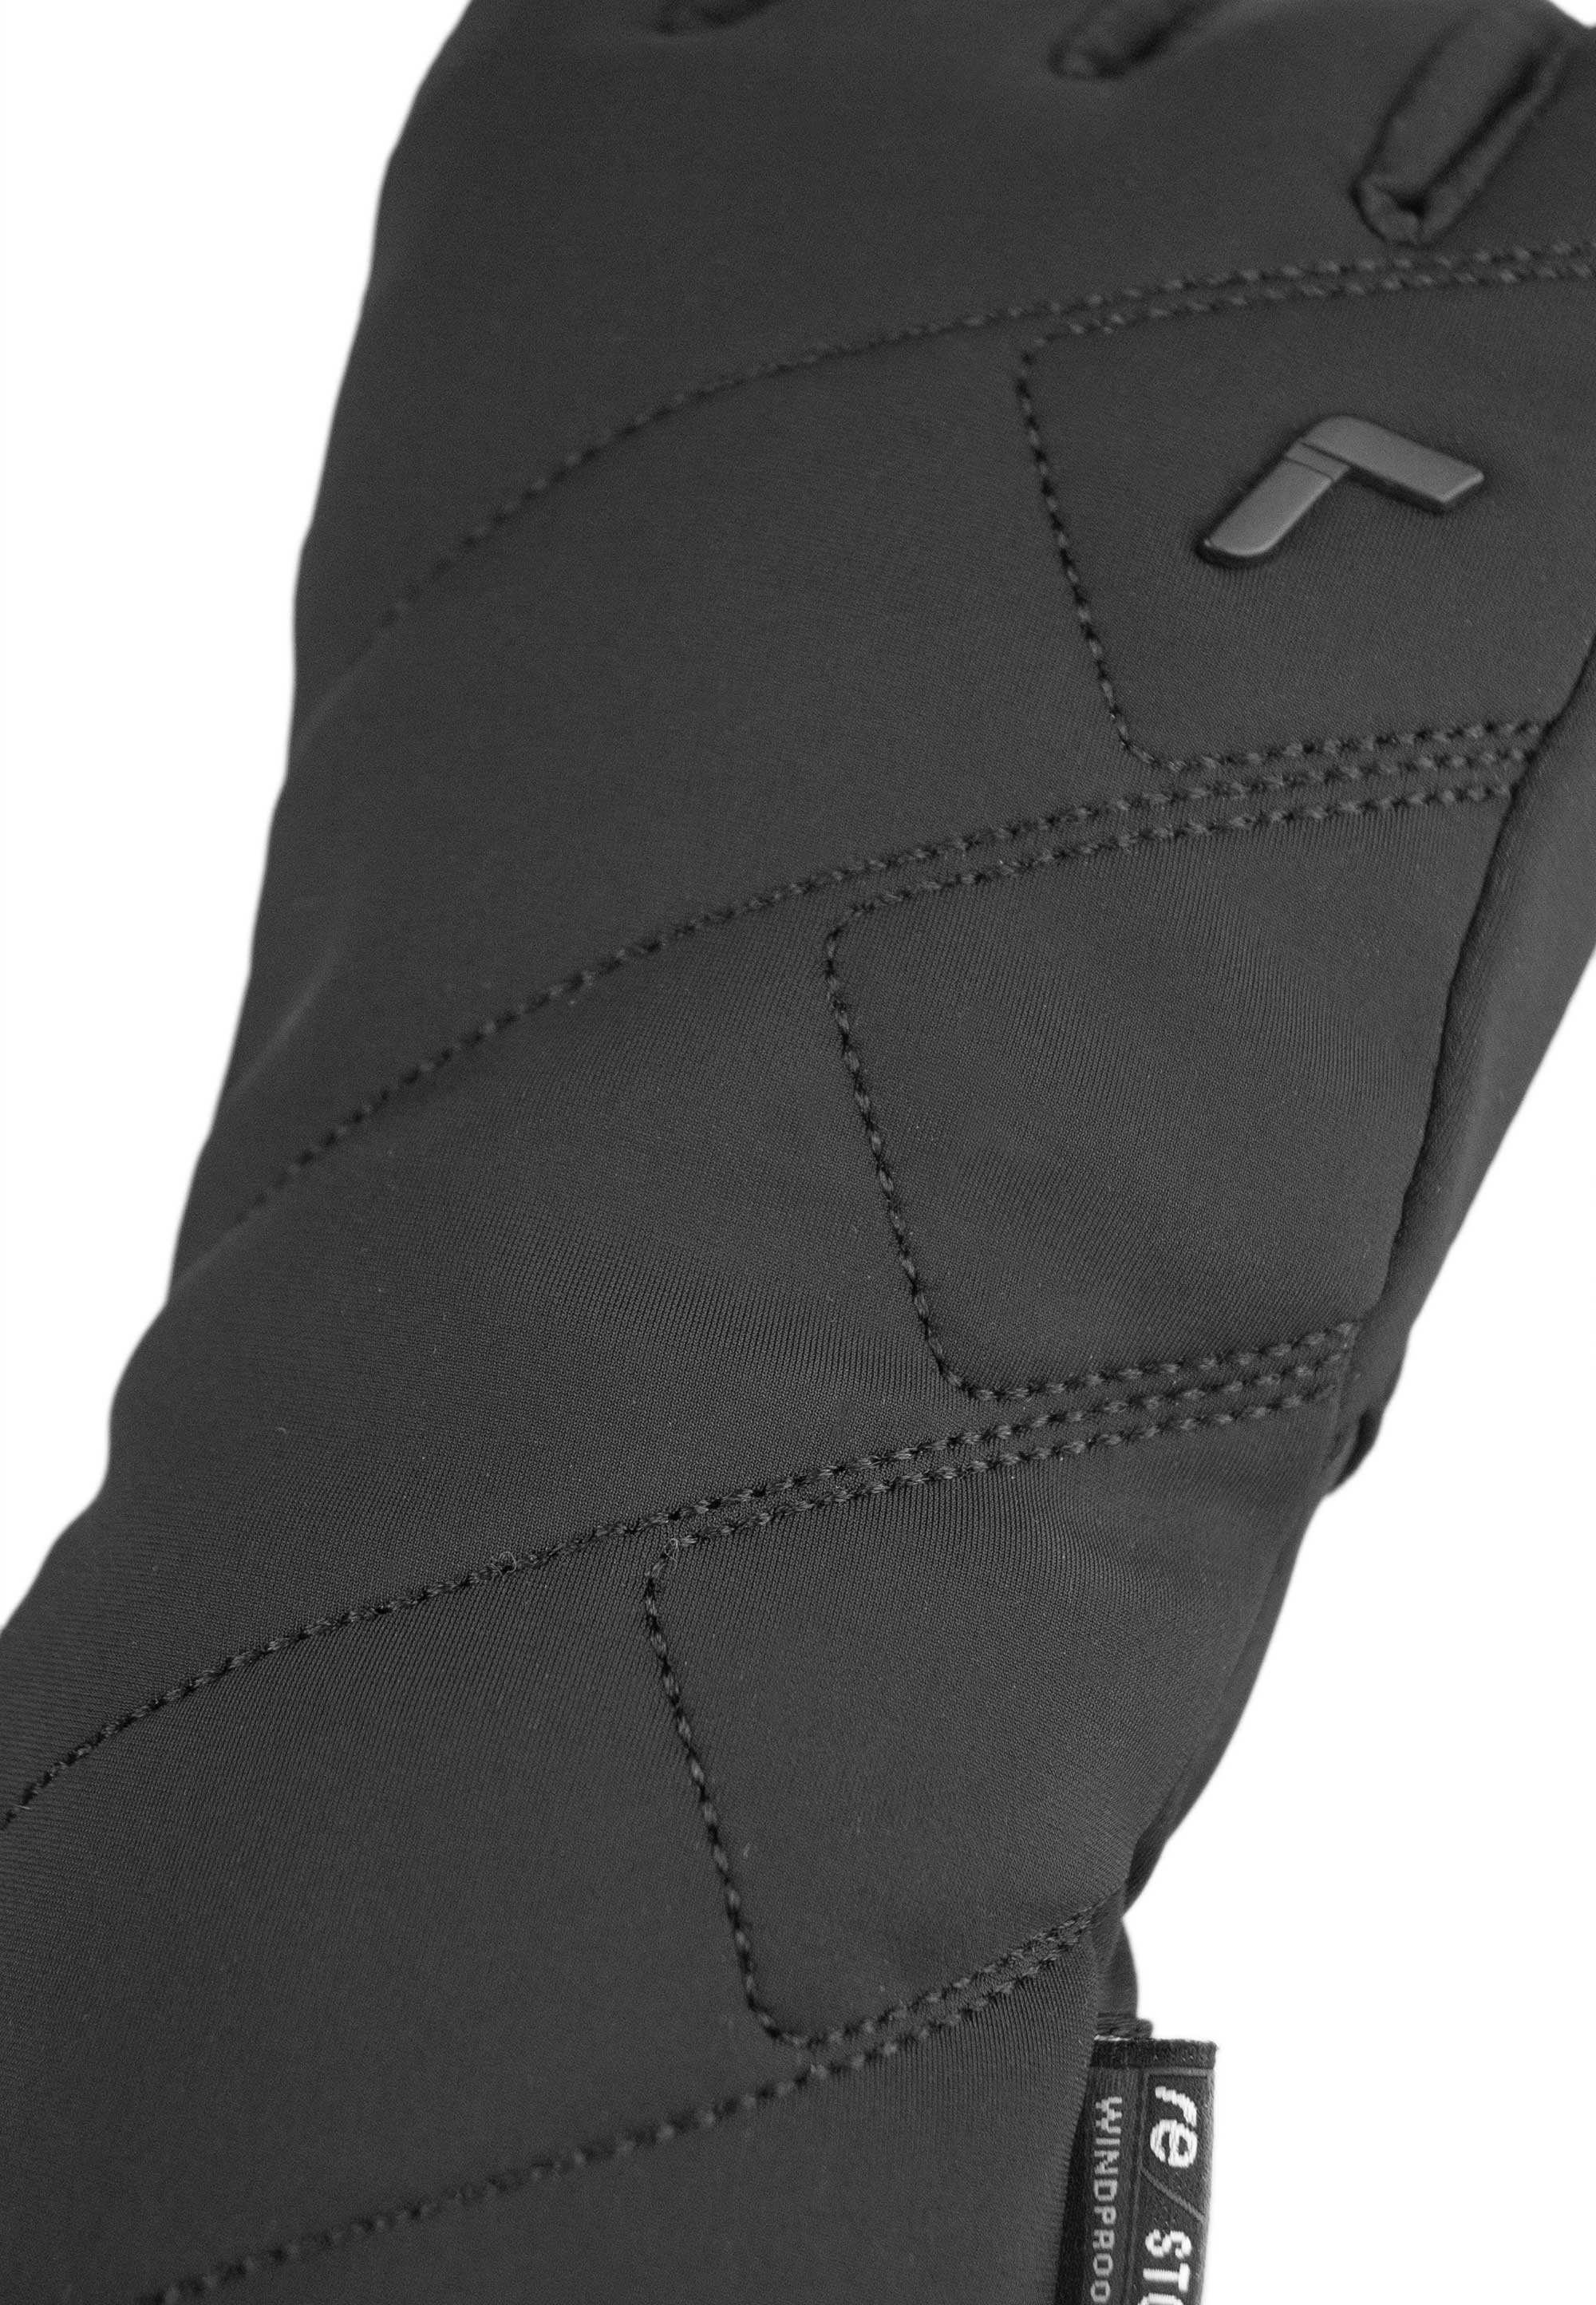 Skihandschuhe praktischer Touch-Funktion Loredana Reusch TOUCH-TEC™ STORMBLOXX™ mit schwarz